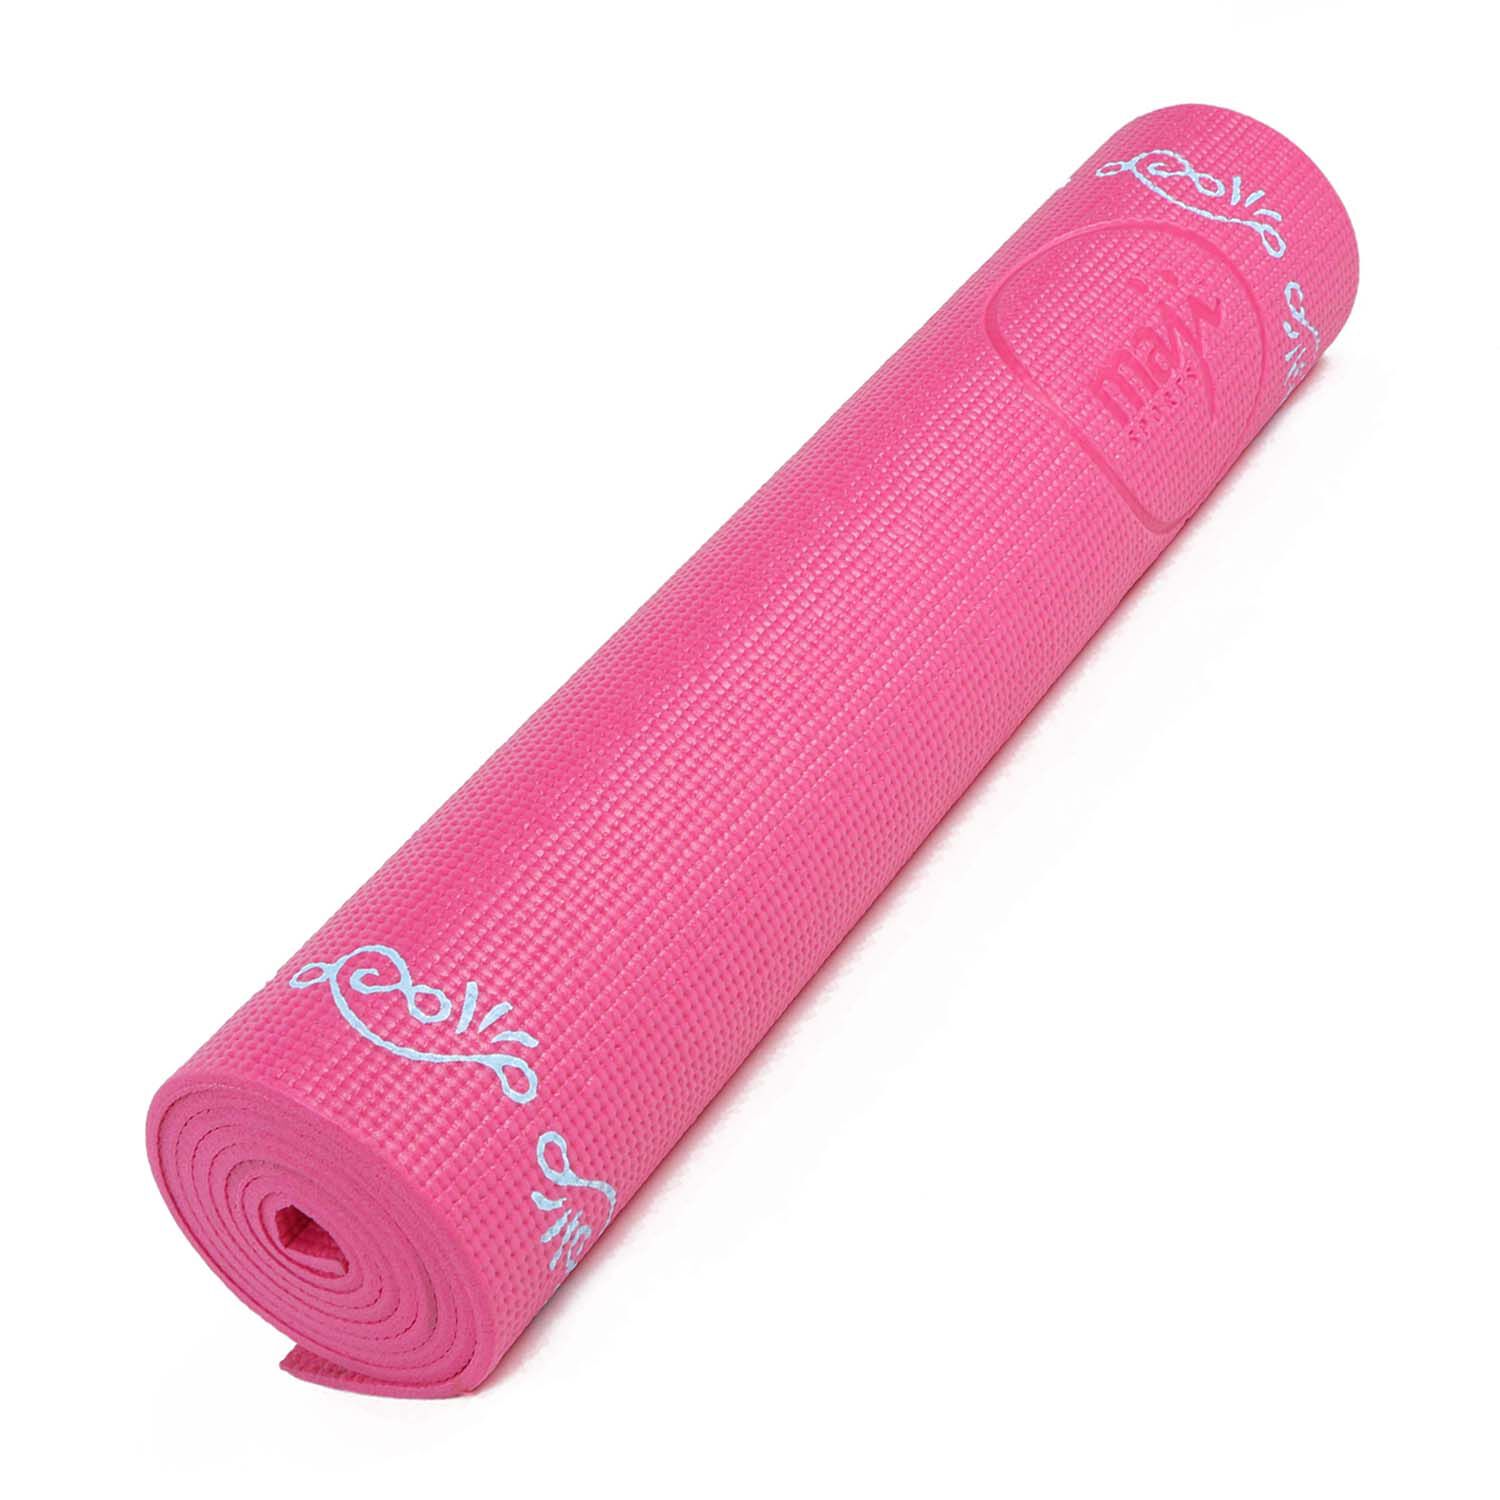 Maji Sports Printed PVC Yoga Mat - Pink